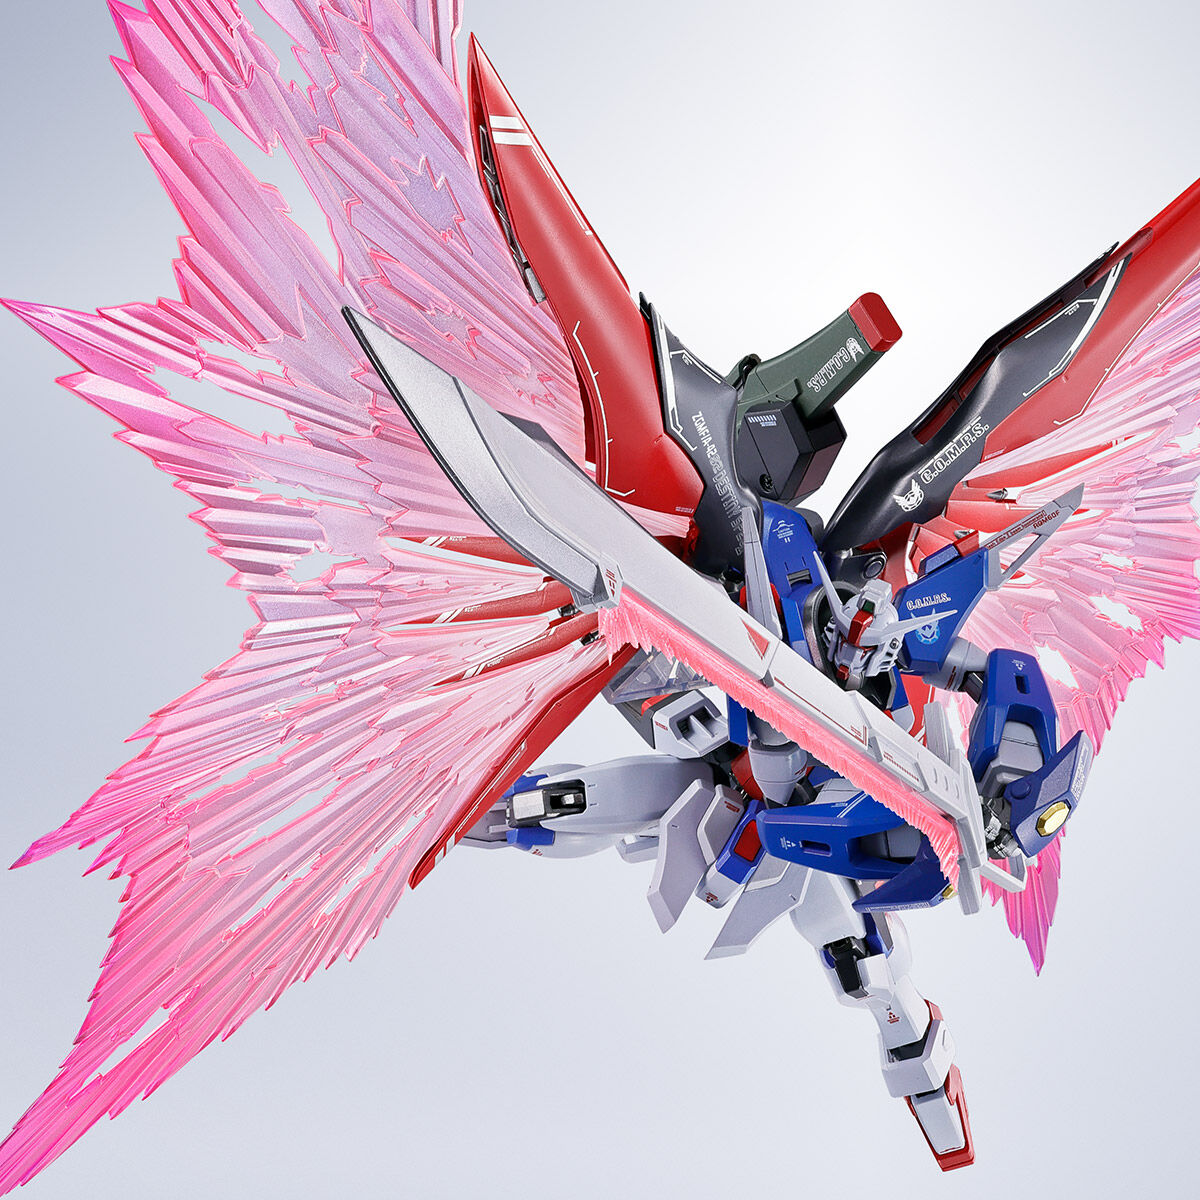 Metal Robot Spirits(Side MS) Wing of Light + Effect set for ZGMF/A-42S2 Destiny Gundam Spec Ⅱ